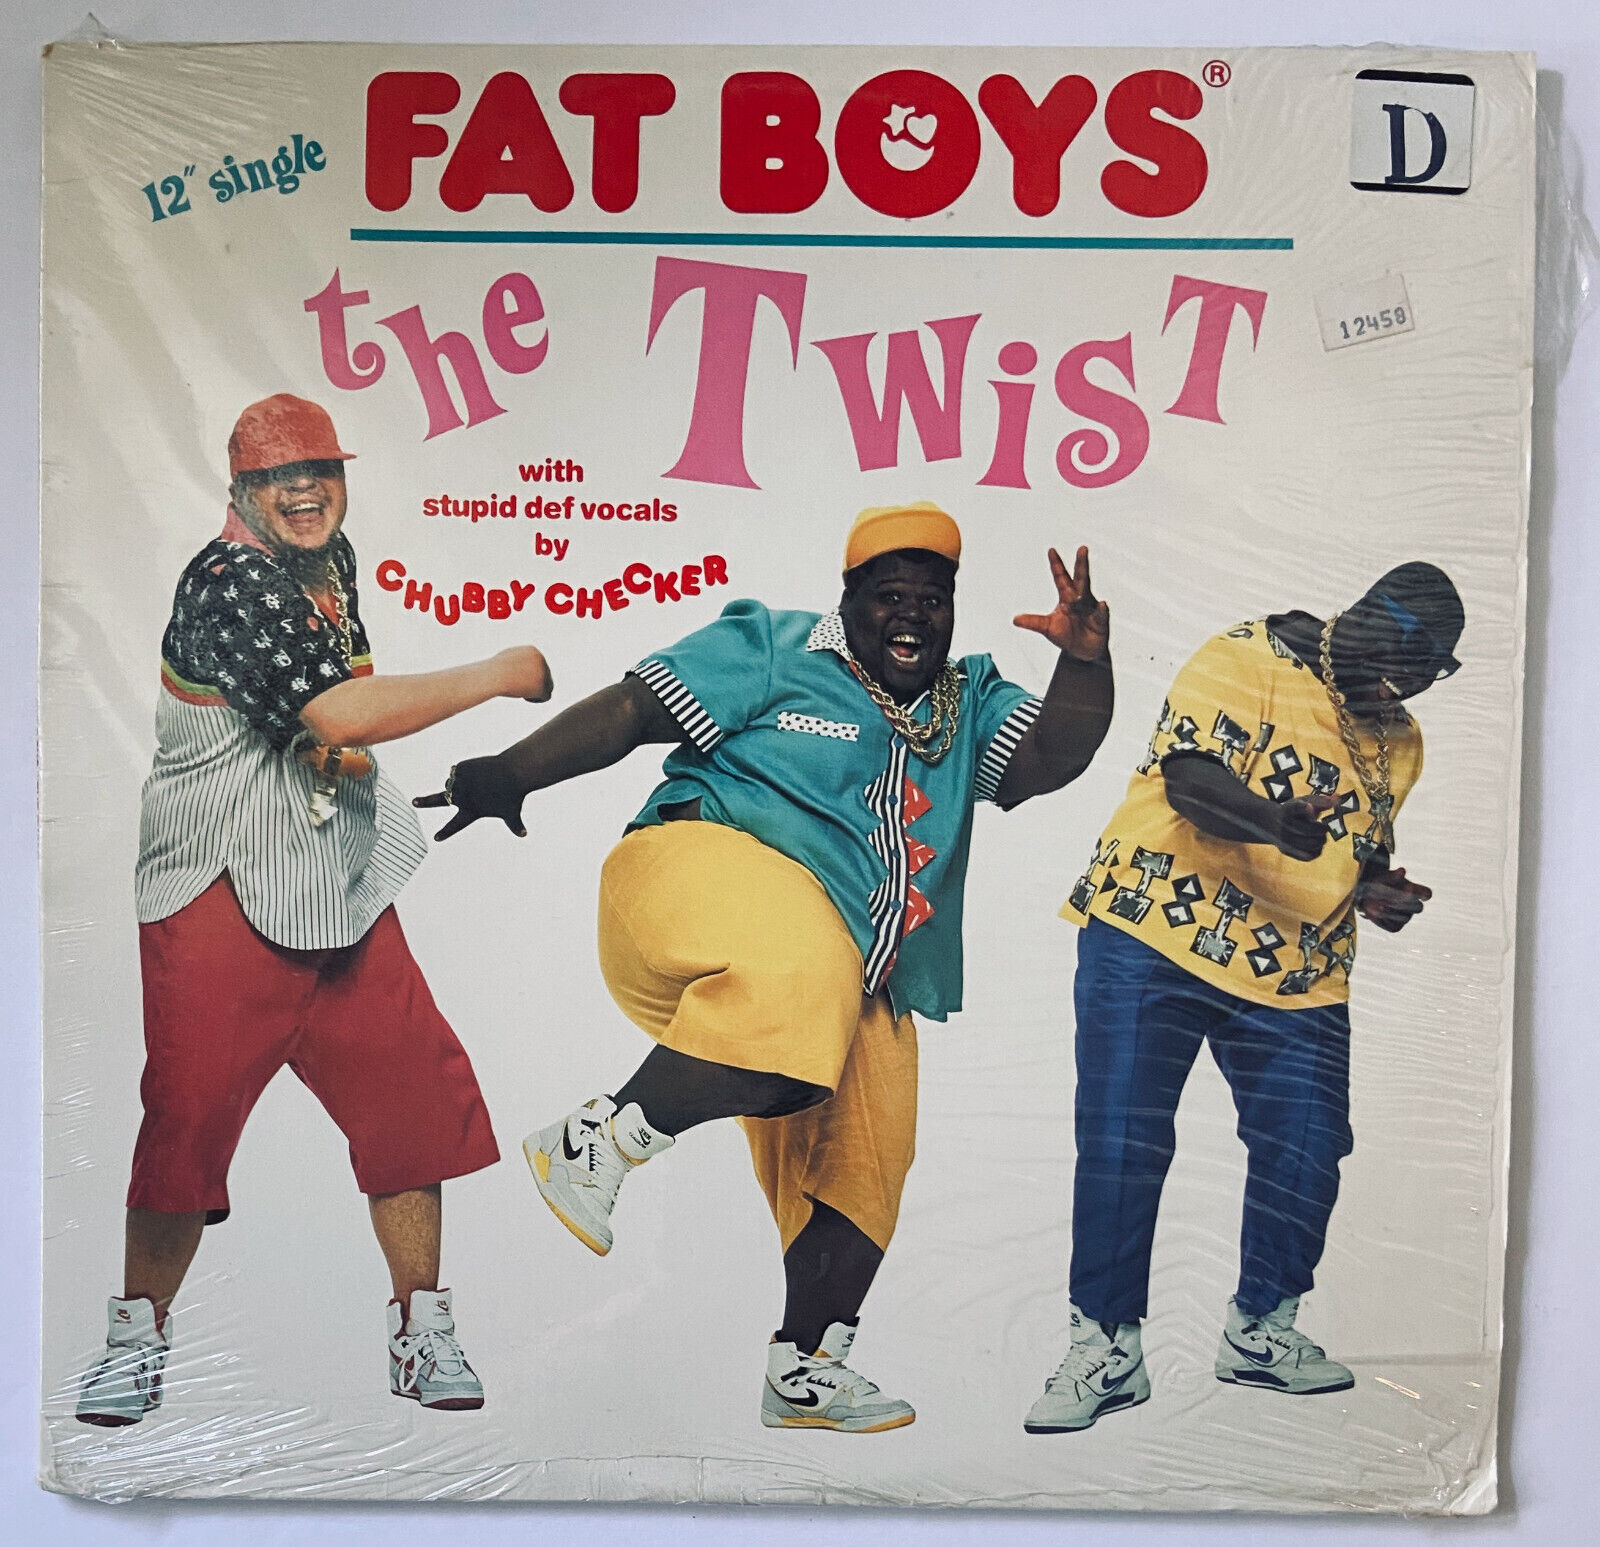 Fat Boys The Twist 12" Vinyl Single Chubby Checker 1988 887 571-1 Shrinkwrap